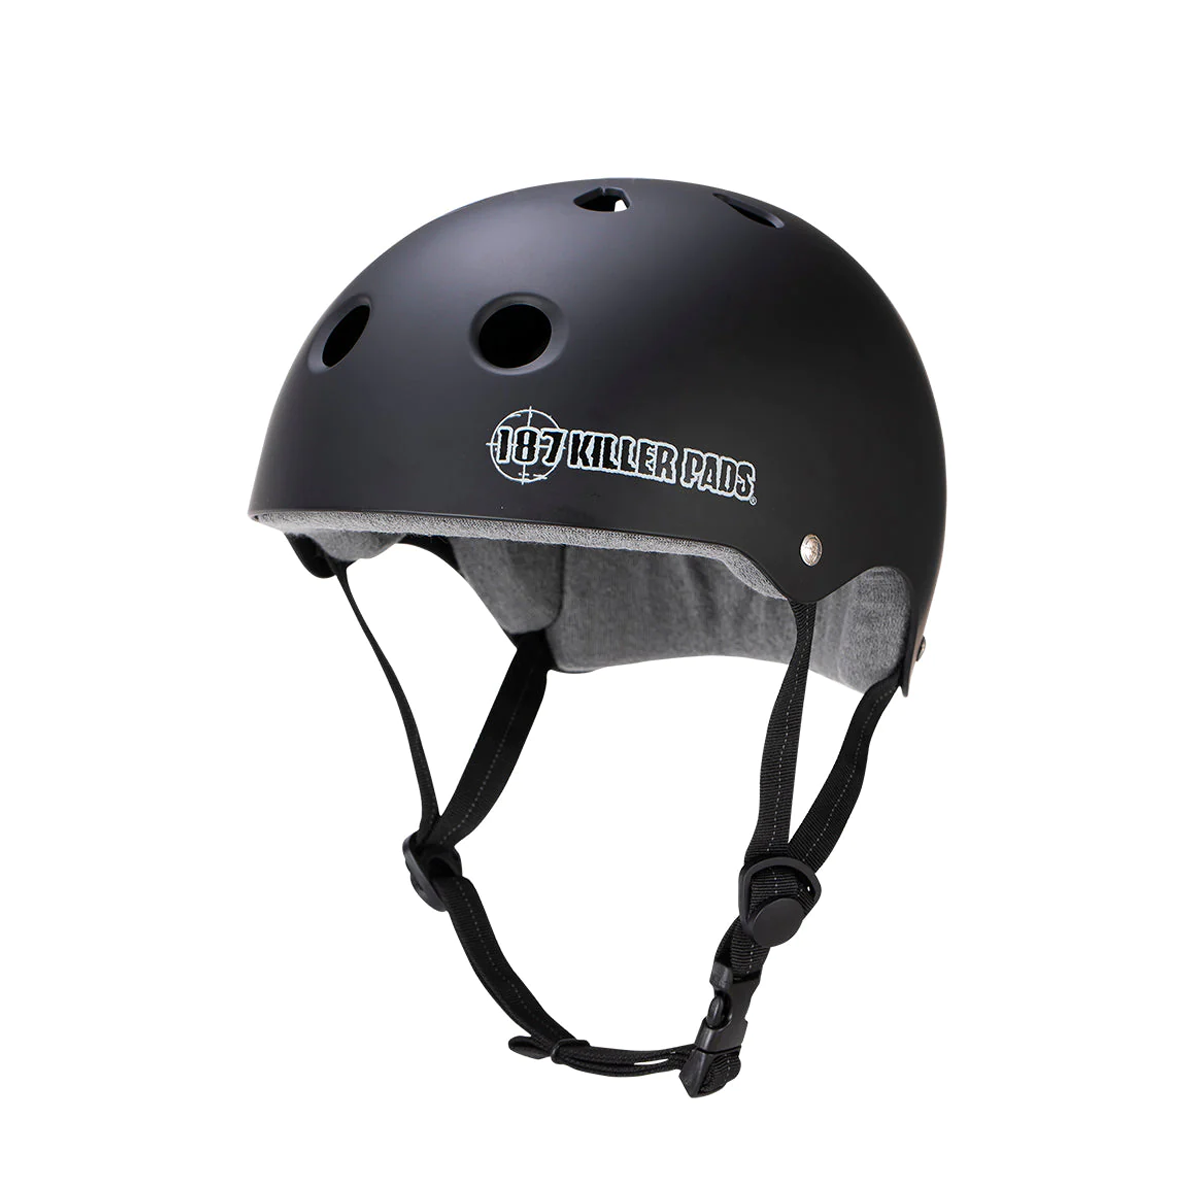 187 Killer Pads Pro Skate Helmet W/ Sweatsaver Liner - Matte Black